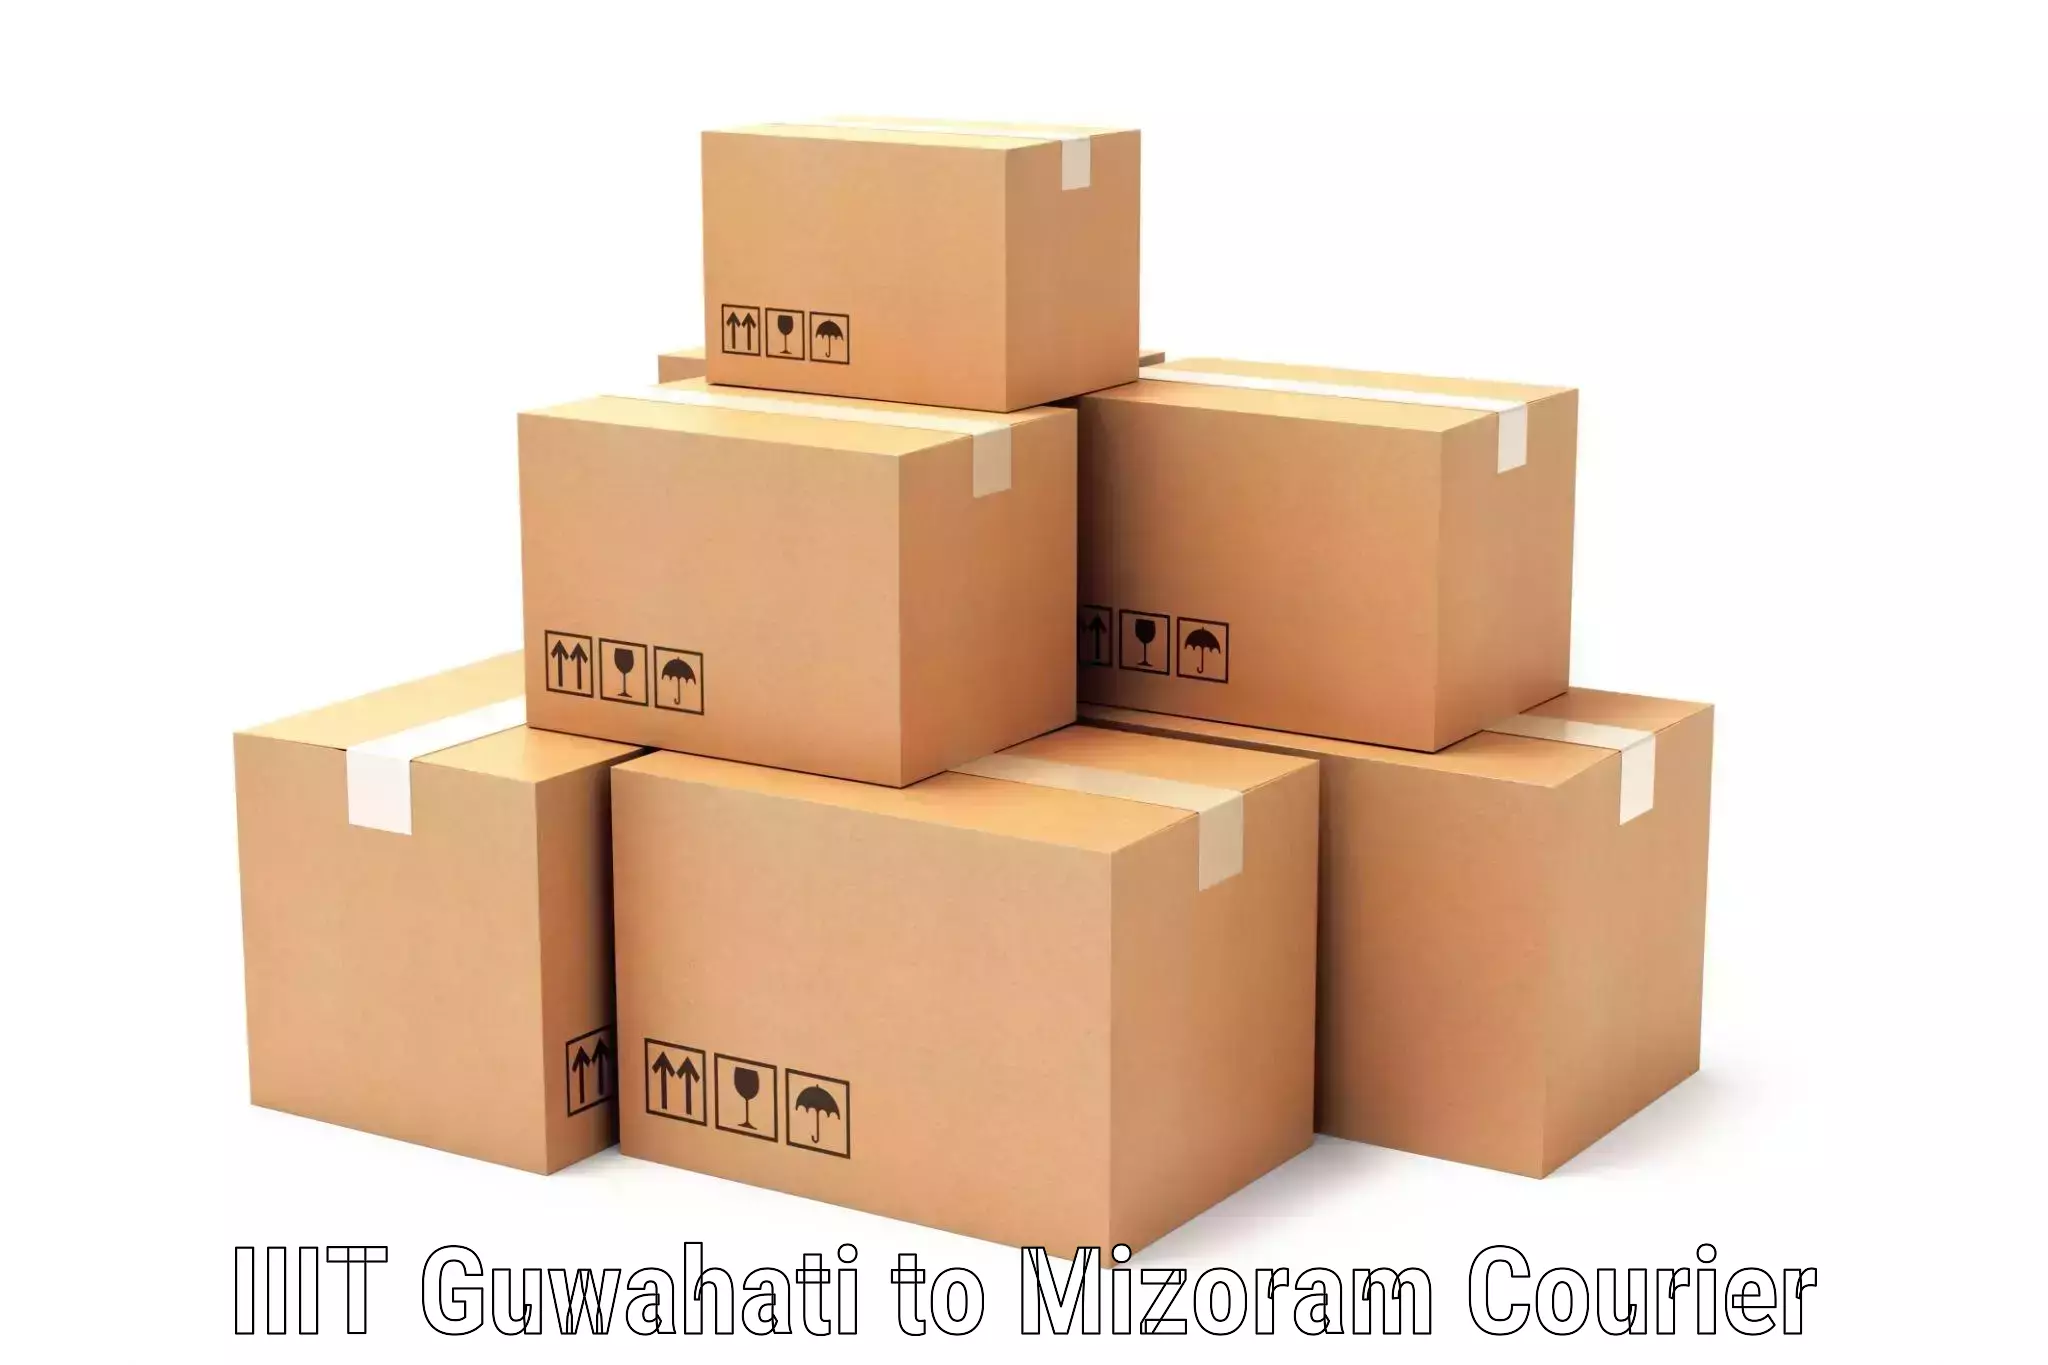 Customized shipping options IIIT Guwahati to Aizawl